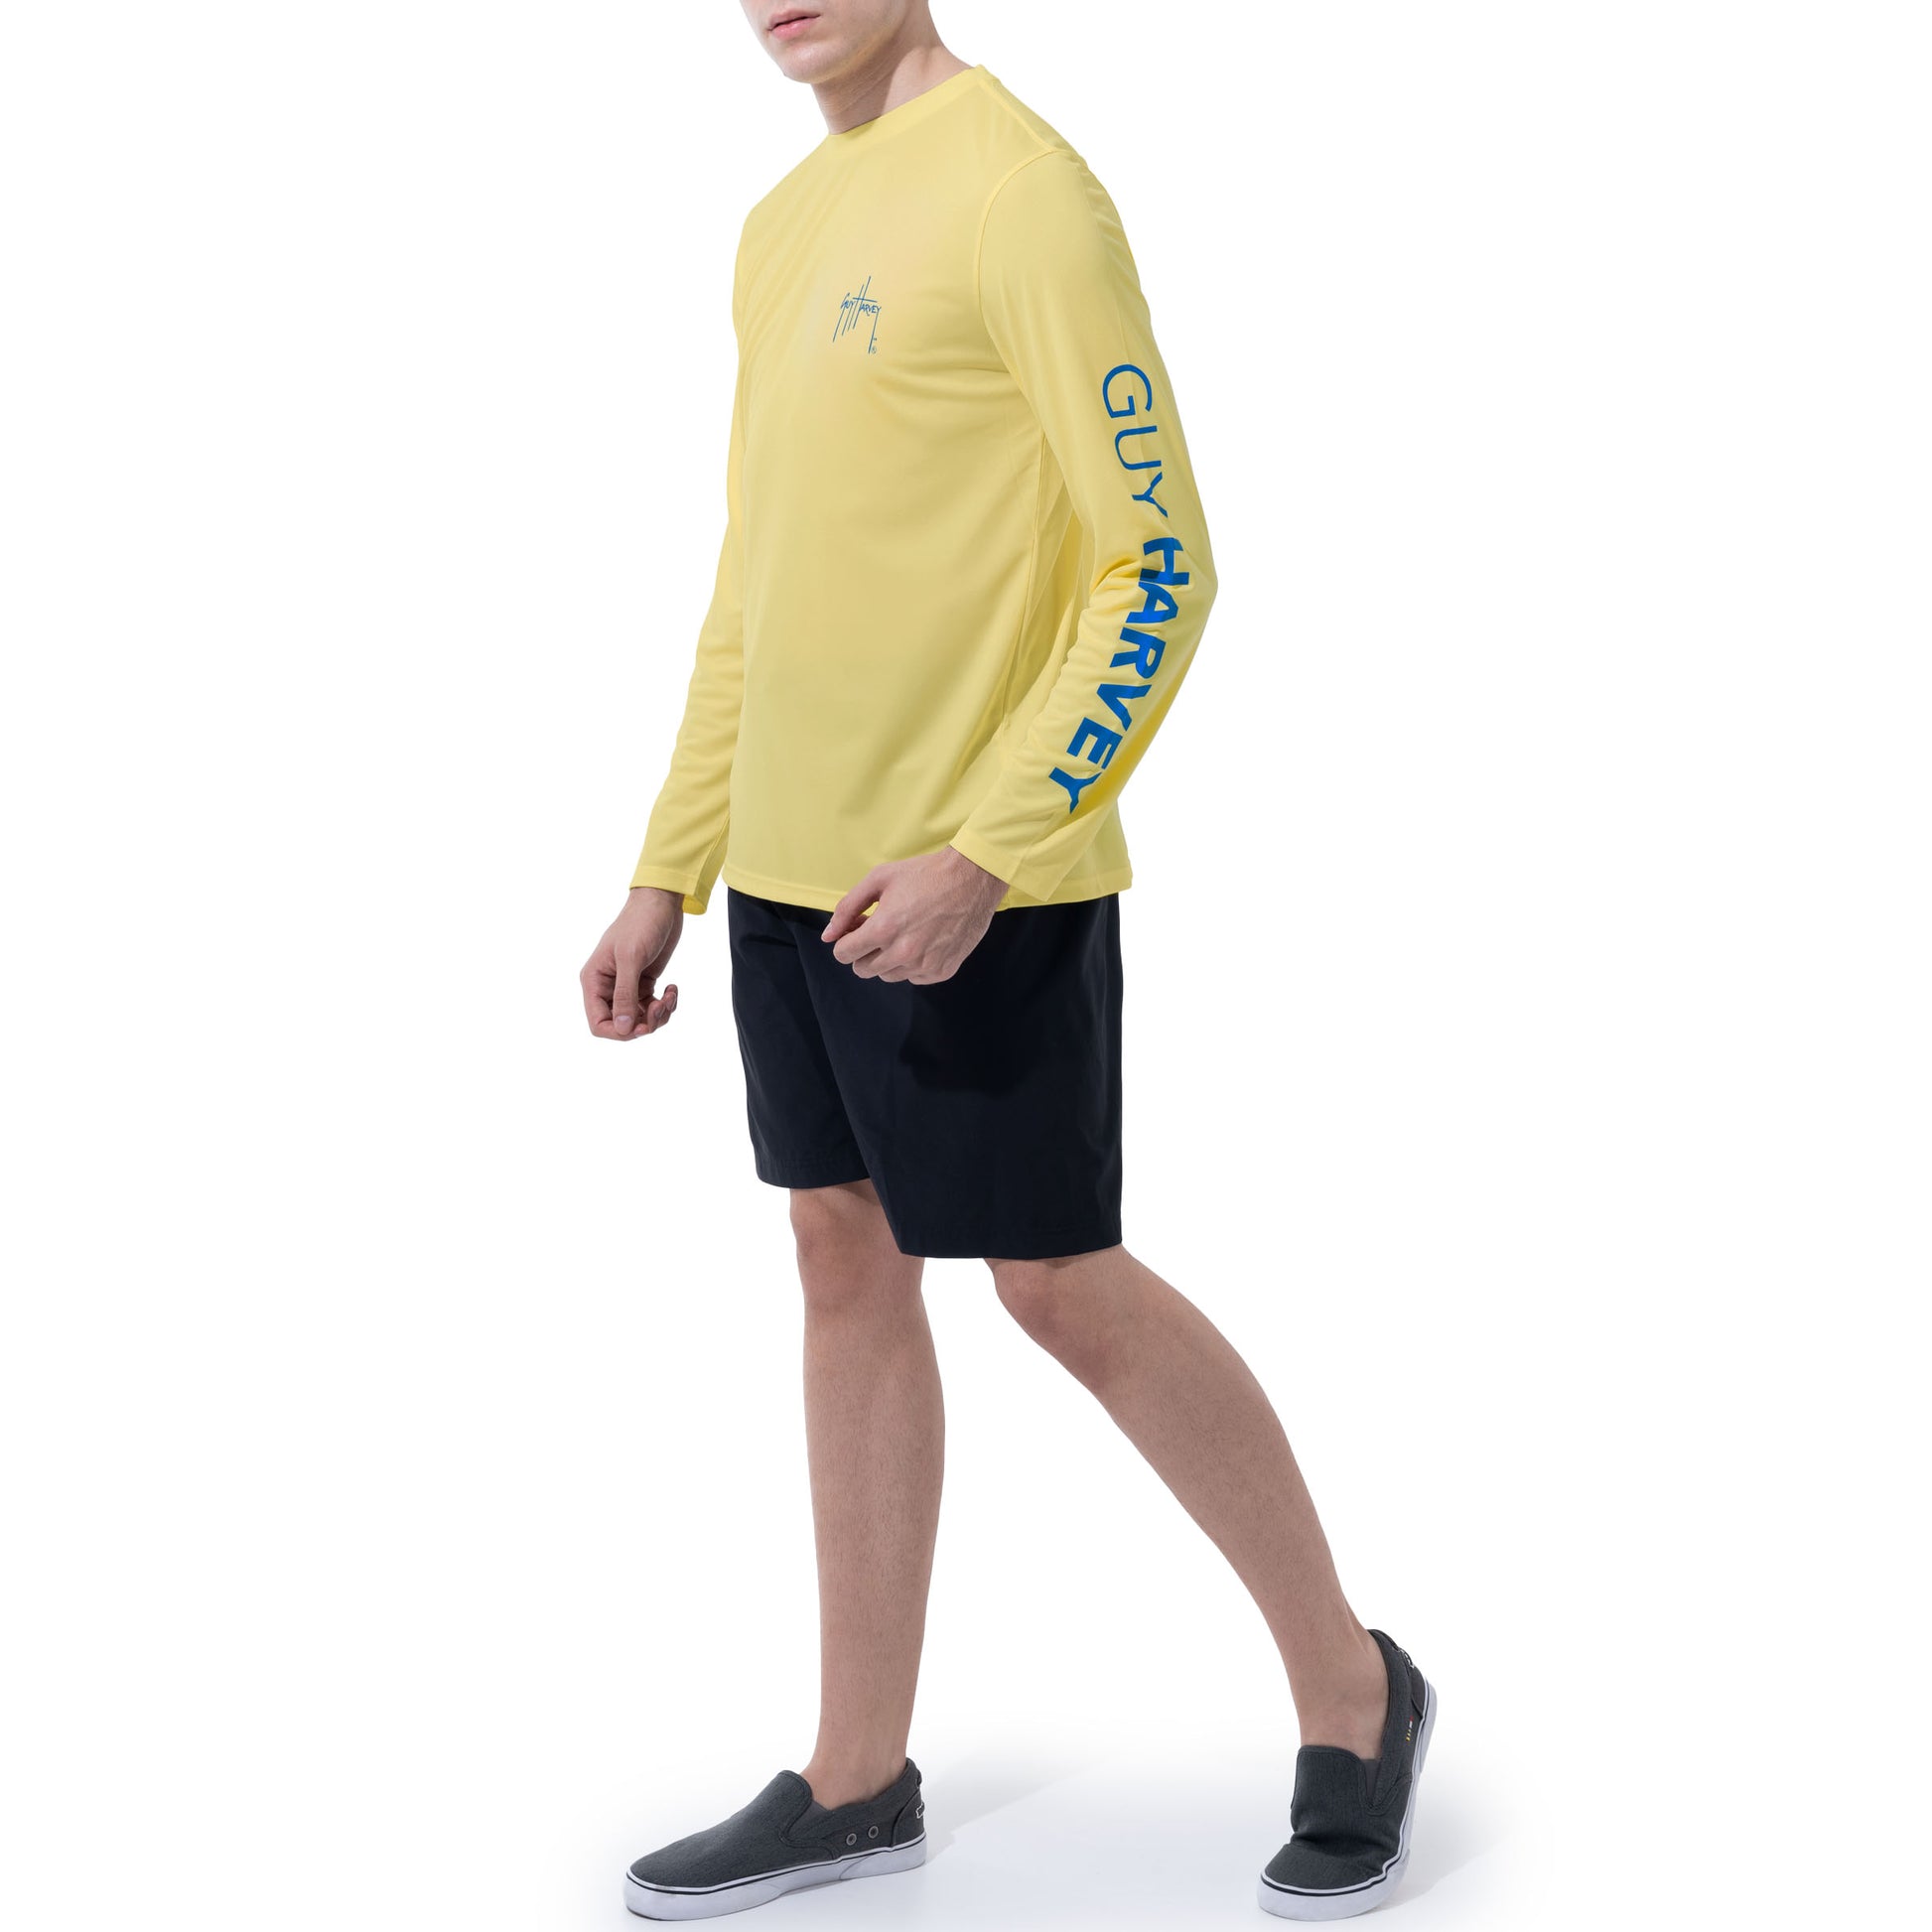 Men's Size Long Sleeve Sun Protection Shirts  UPF50+ Sun Protection – Guts  Fishing Apparel